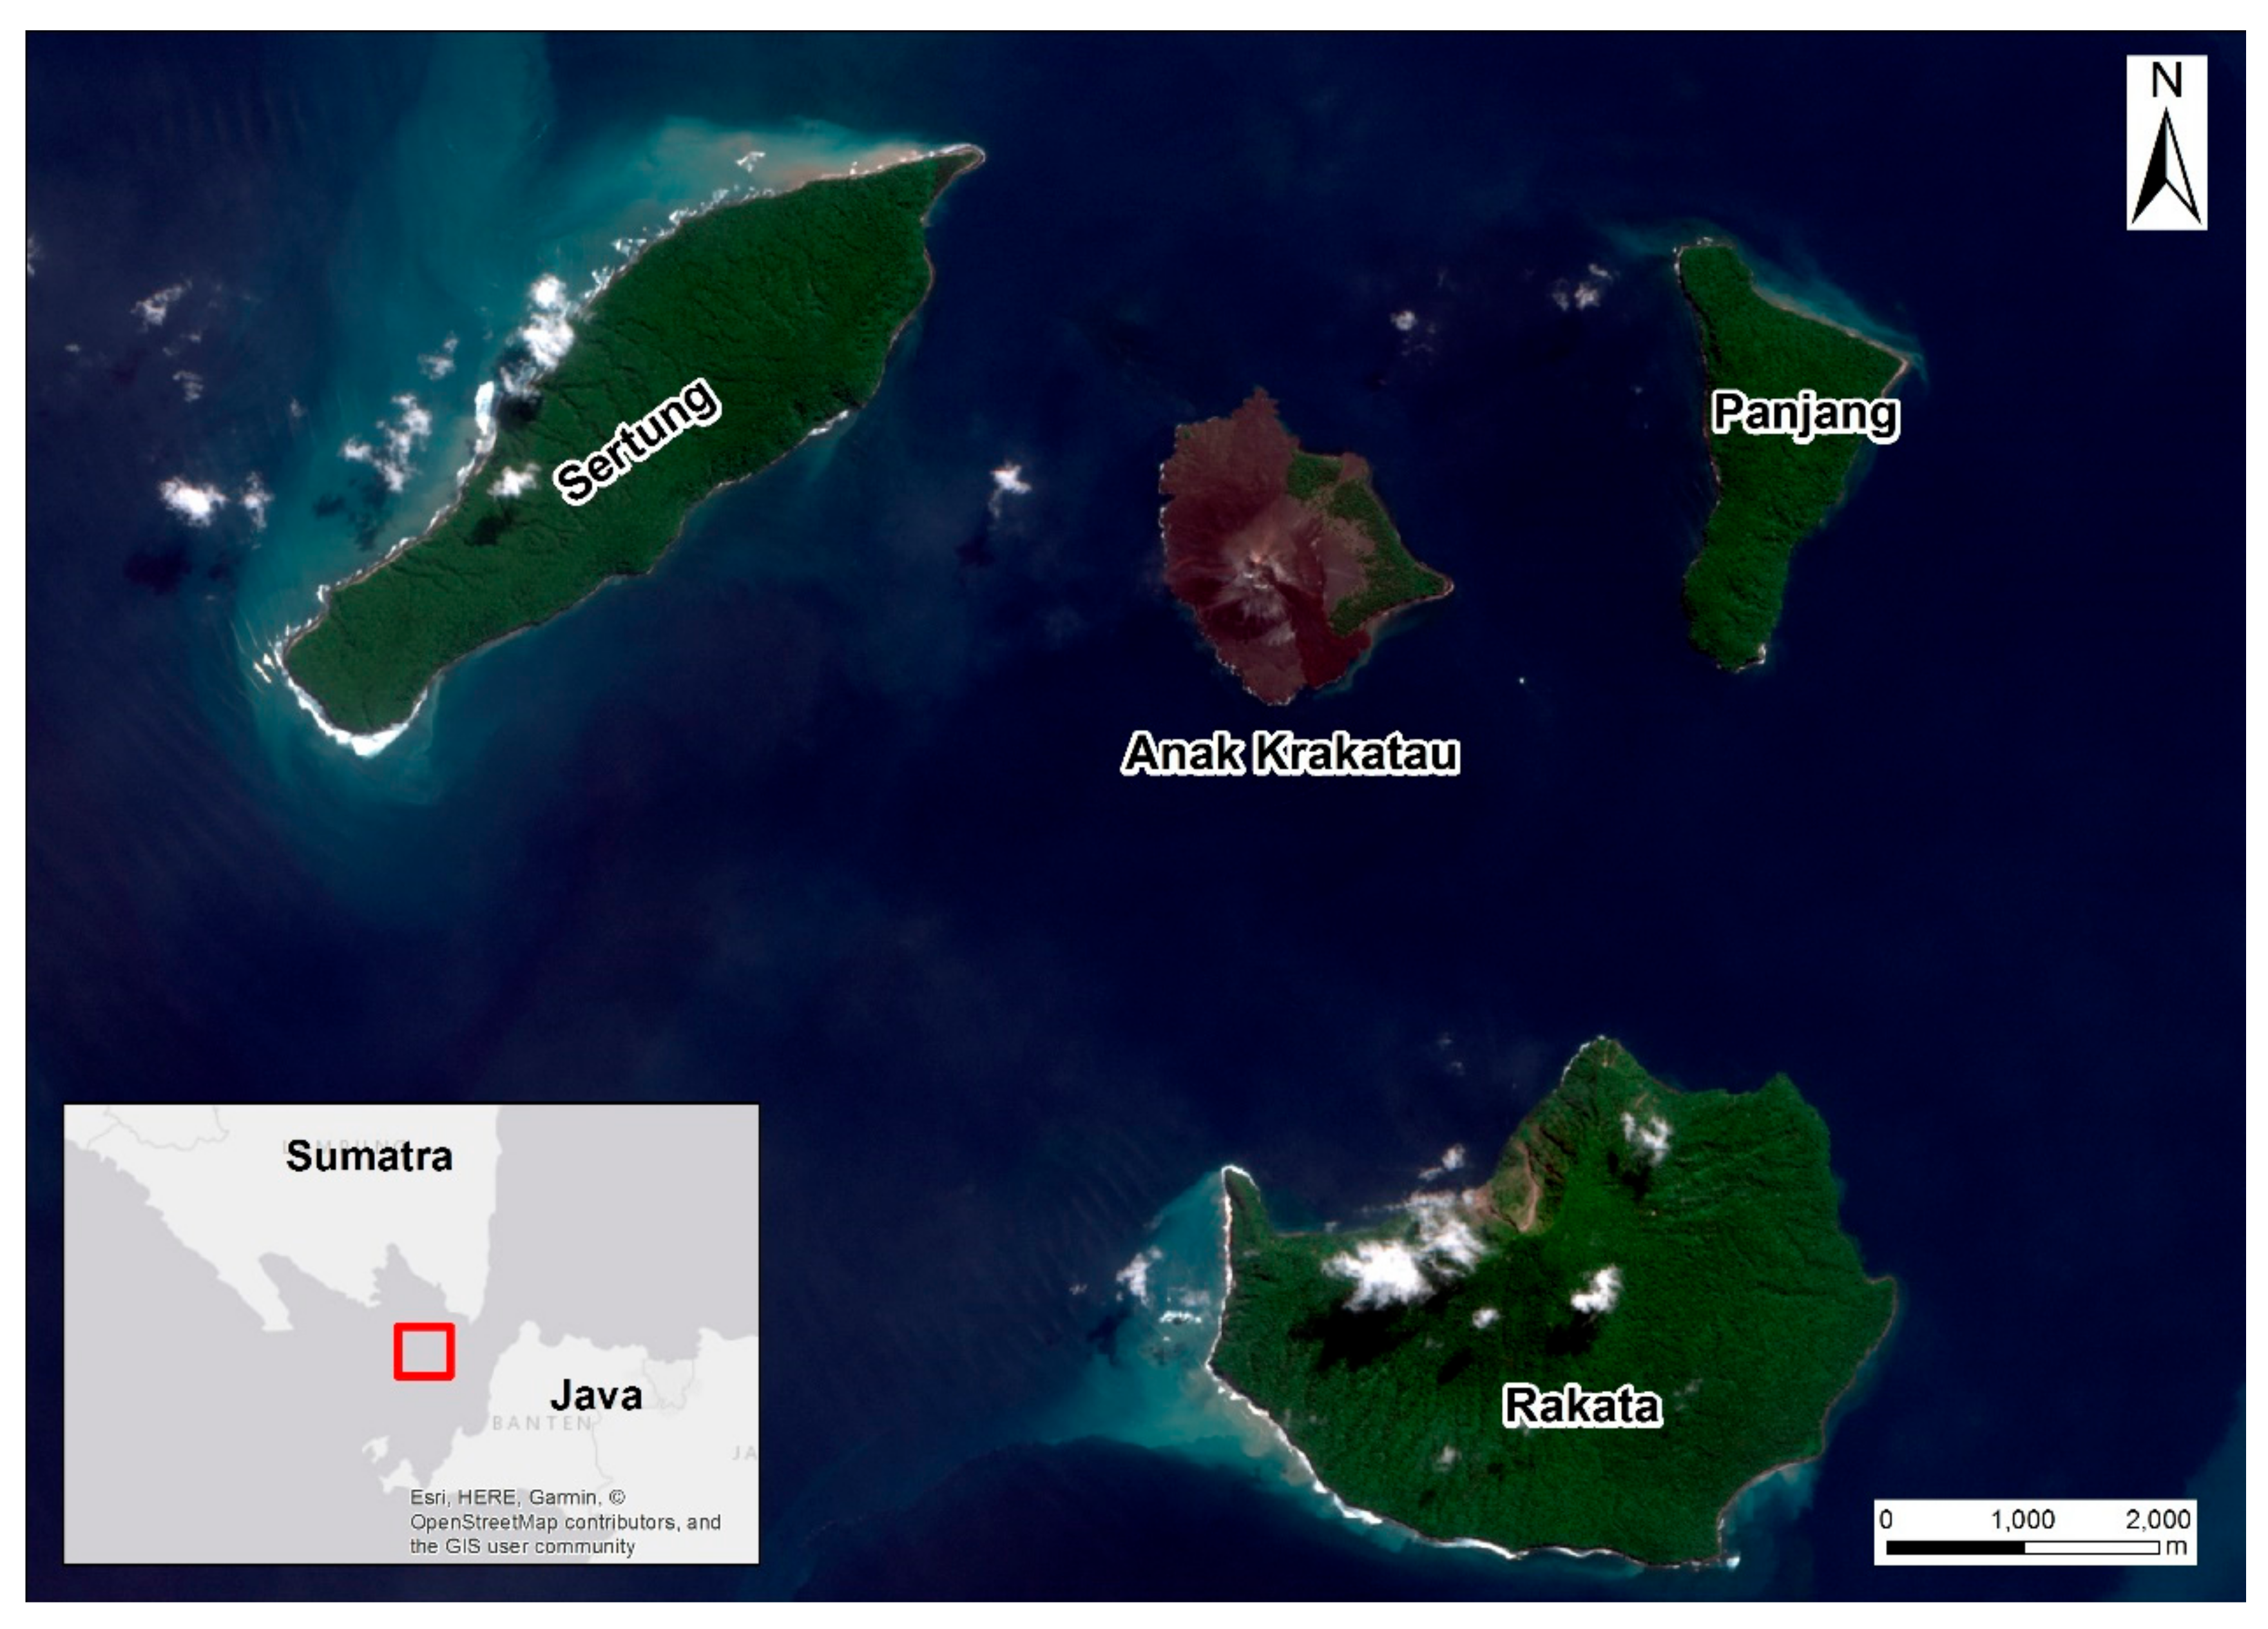 Вулкан кракатау на каком государстве. Вулкан анак-Кракатау на карте. Вулкан Кракатау Индонезия на карте. Остров Кракатау на карте.